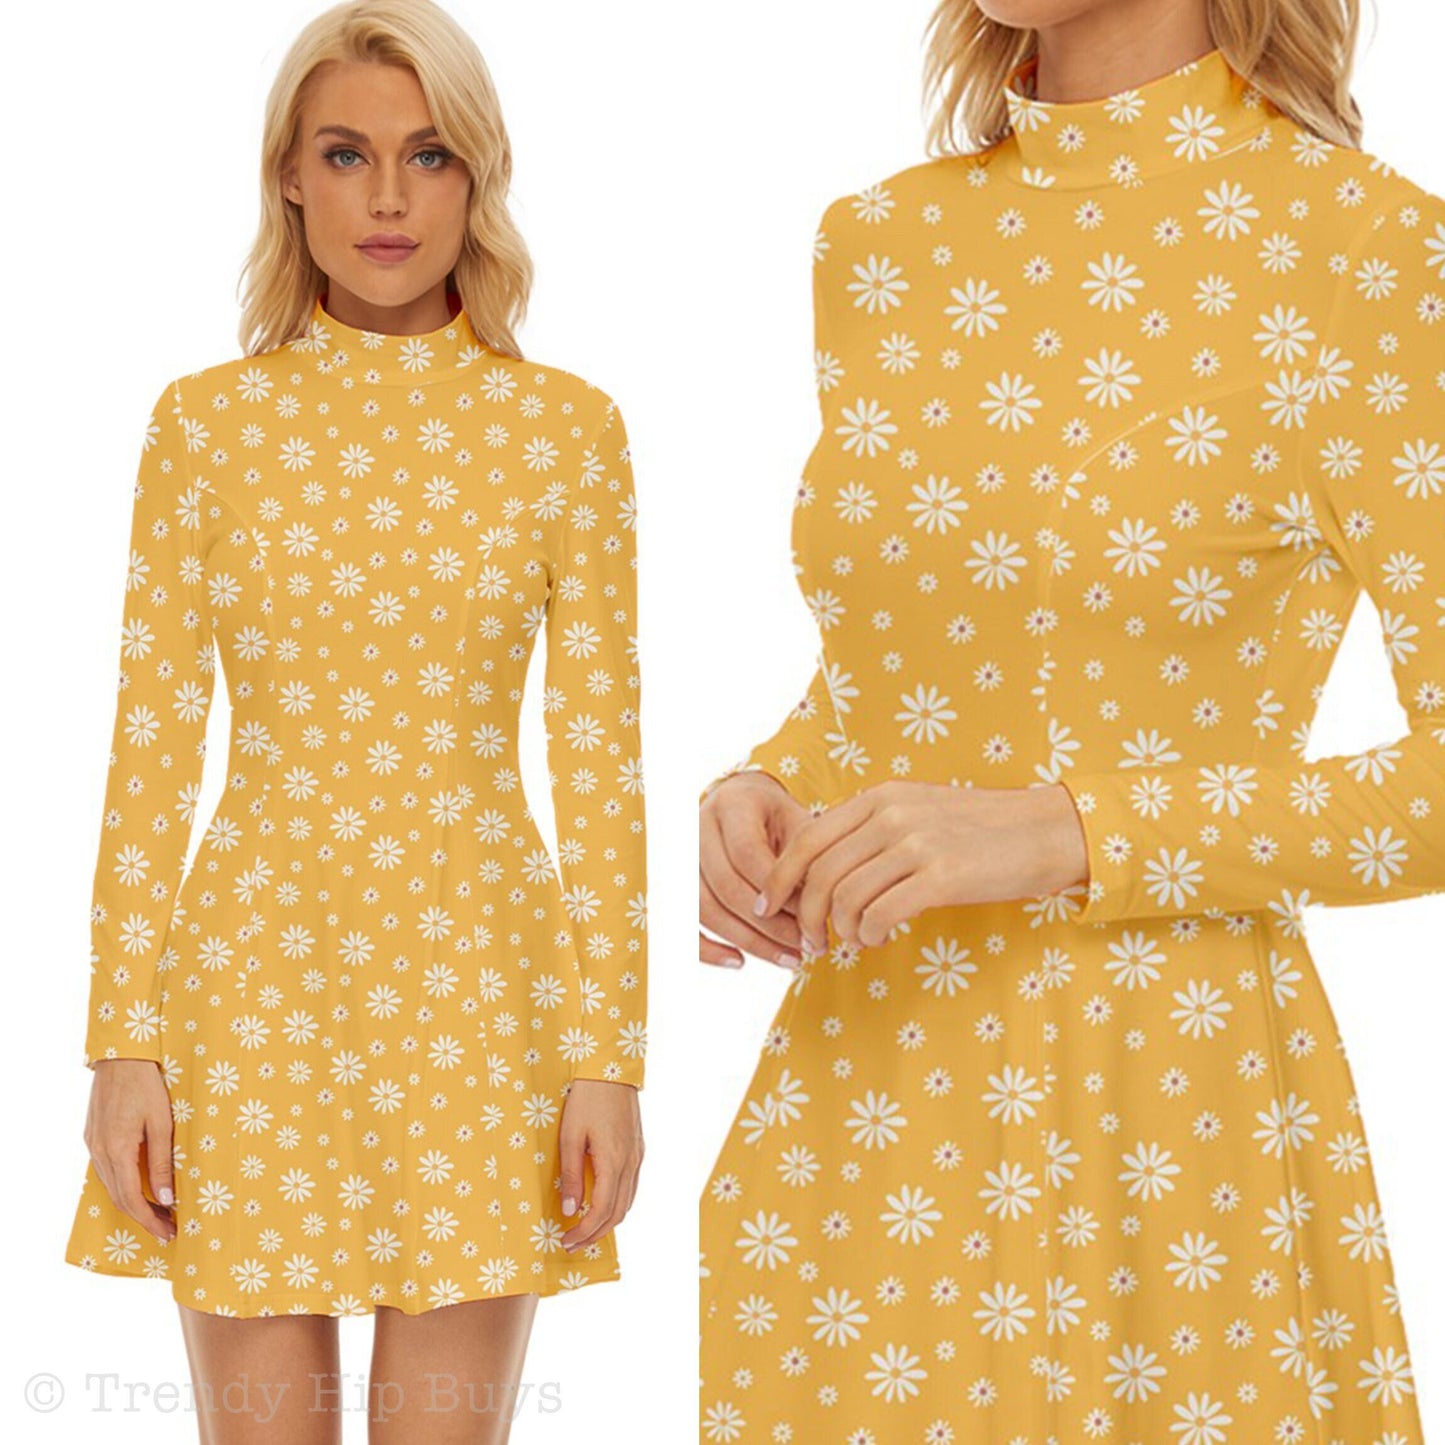 60er-Kleiderstil, Mod-Kleid, Gelbes Mod-Kleid, Rollkragenkleid, GOGO-Kleid, Kleid im 60er-Jahre-Stil, 60er-Minikleid, Blumenkleid, Retro-Kleid